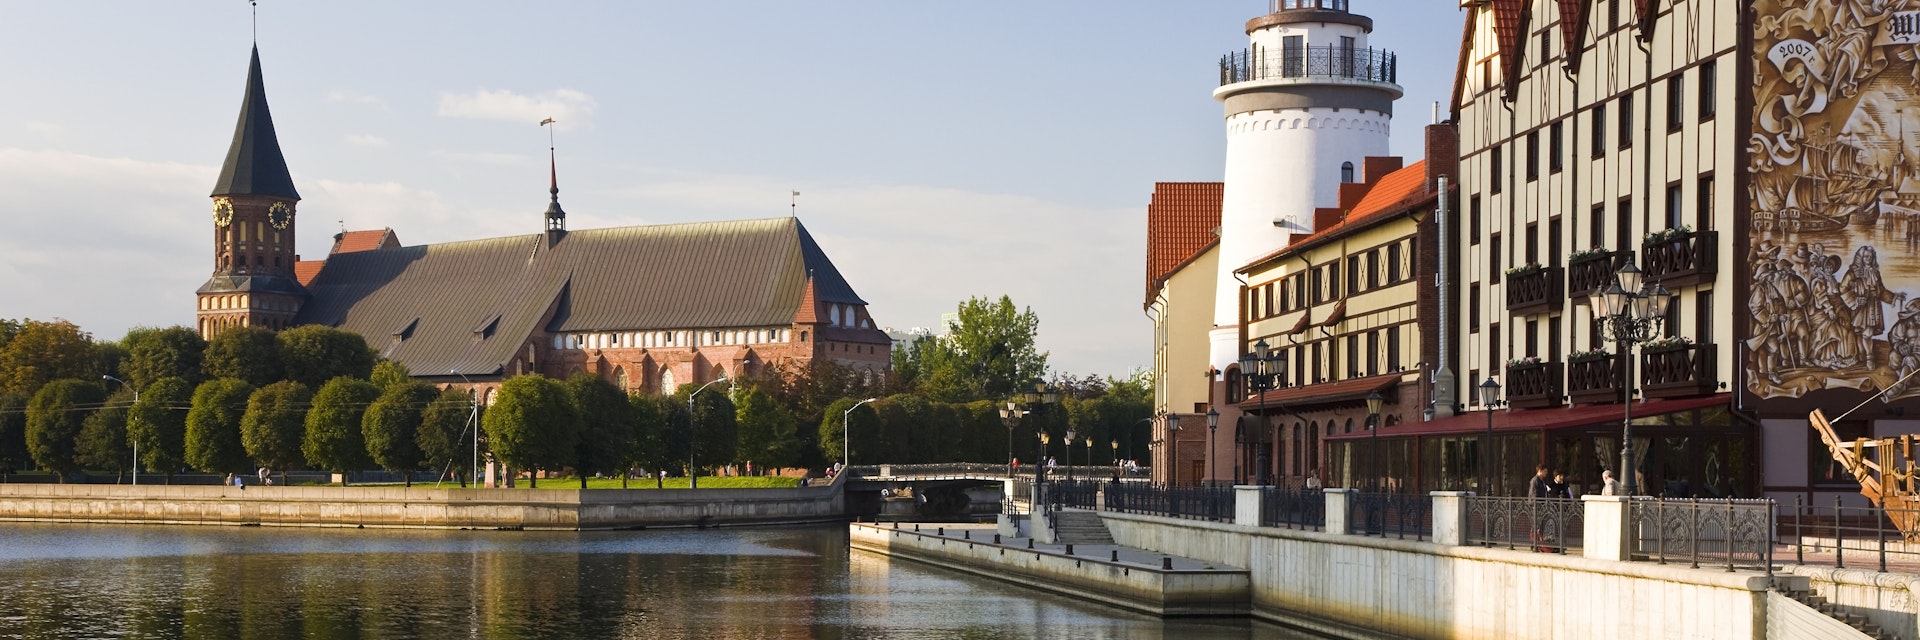 Cathedral and Fish Village, a modern housing, hotel and restaurant development, Kaliningrad (Konigsberg), Russia, Europe